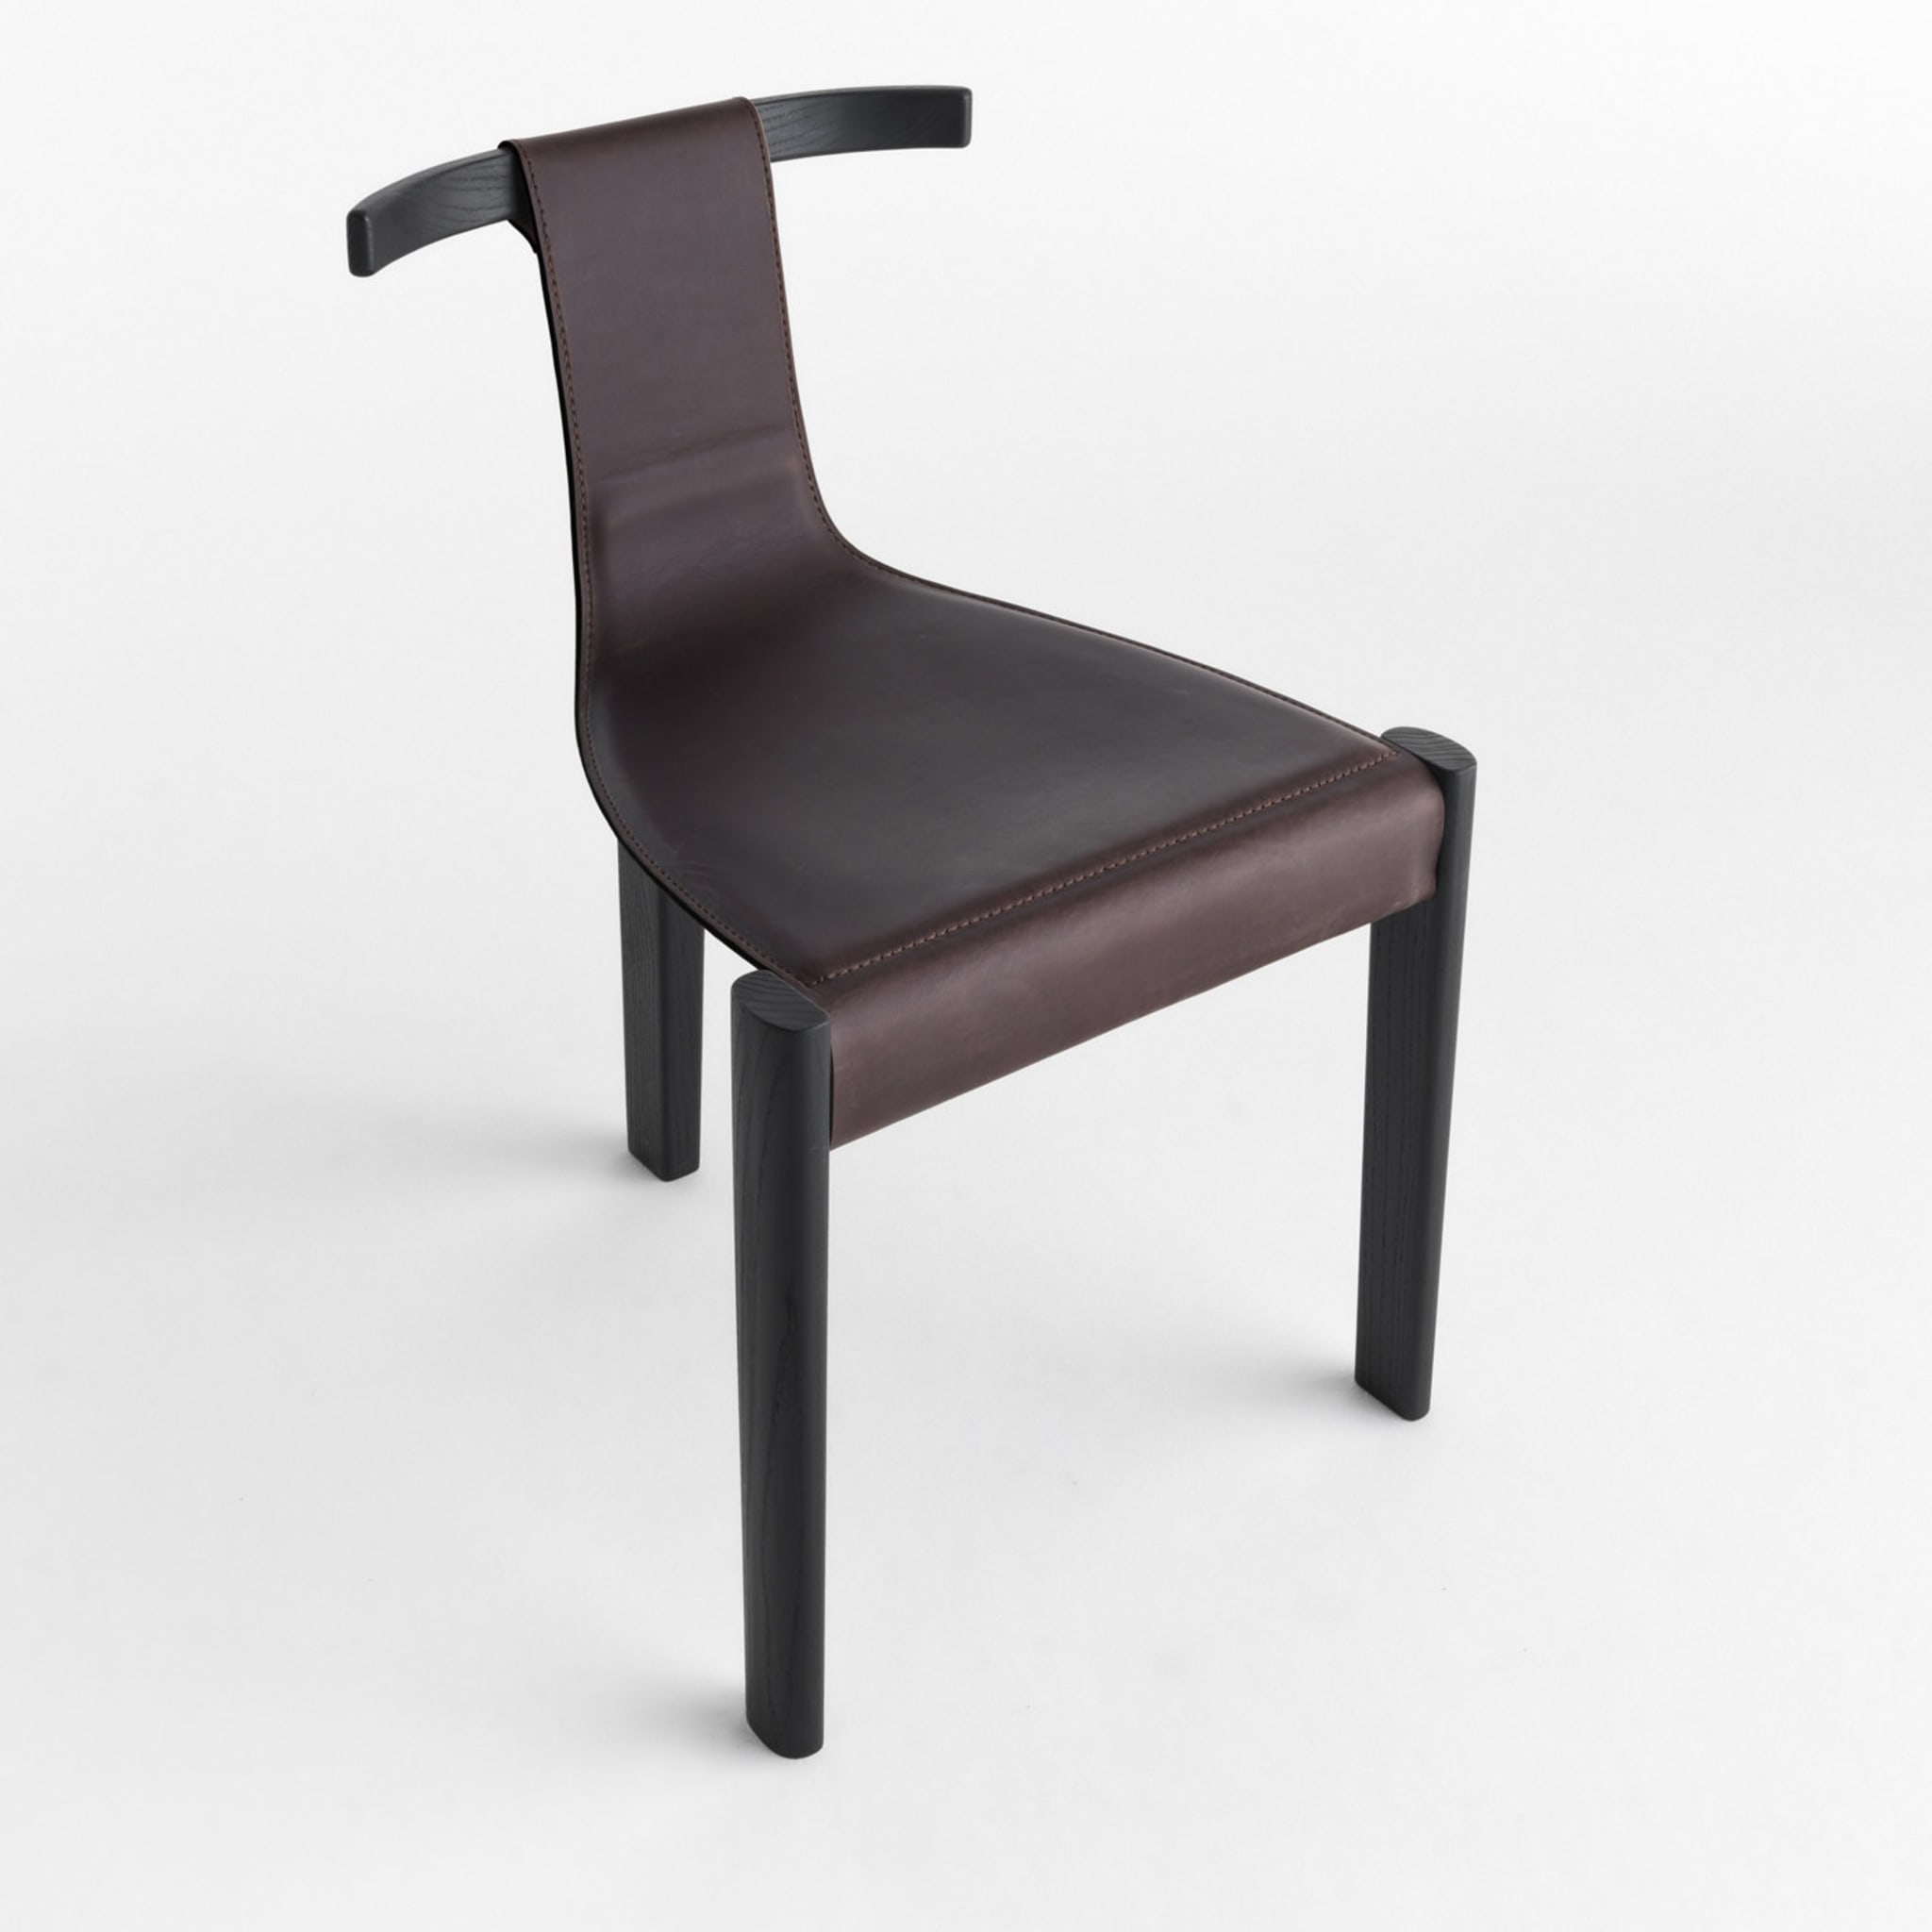 Pablita Brauner Stuhl von Marcello Pozzi - Alternative Ansicht 1